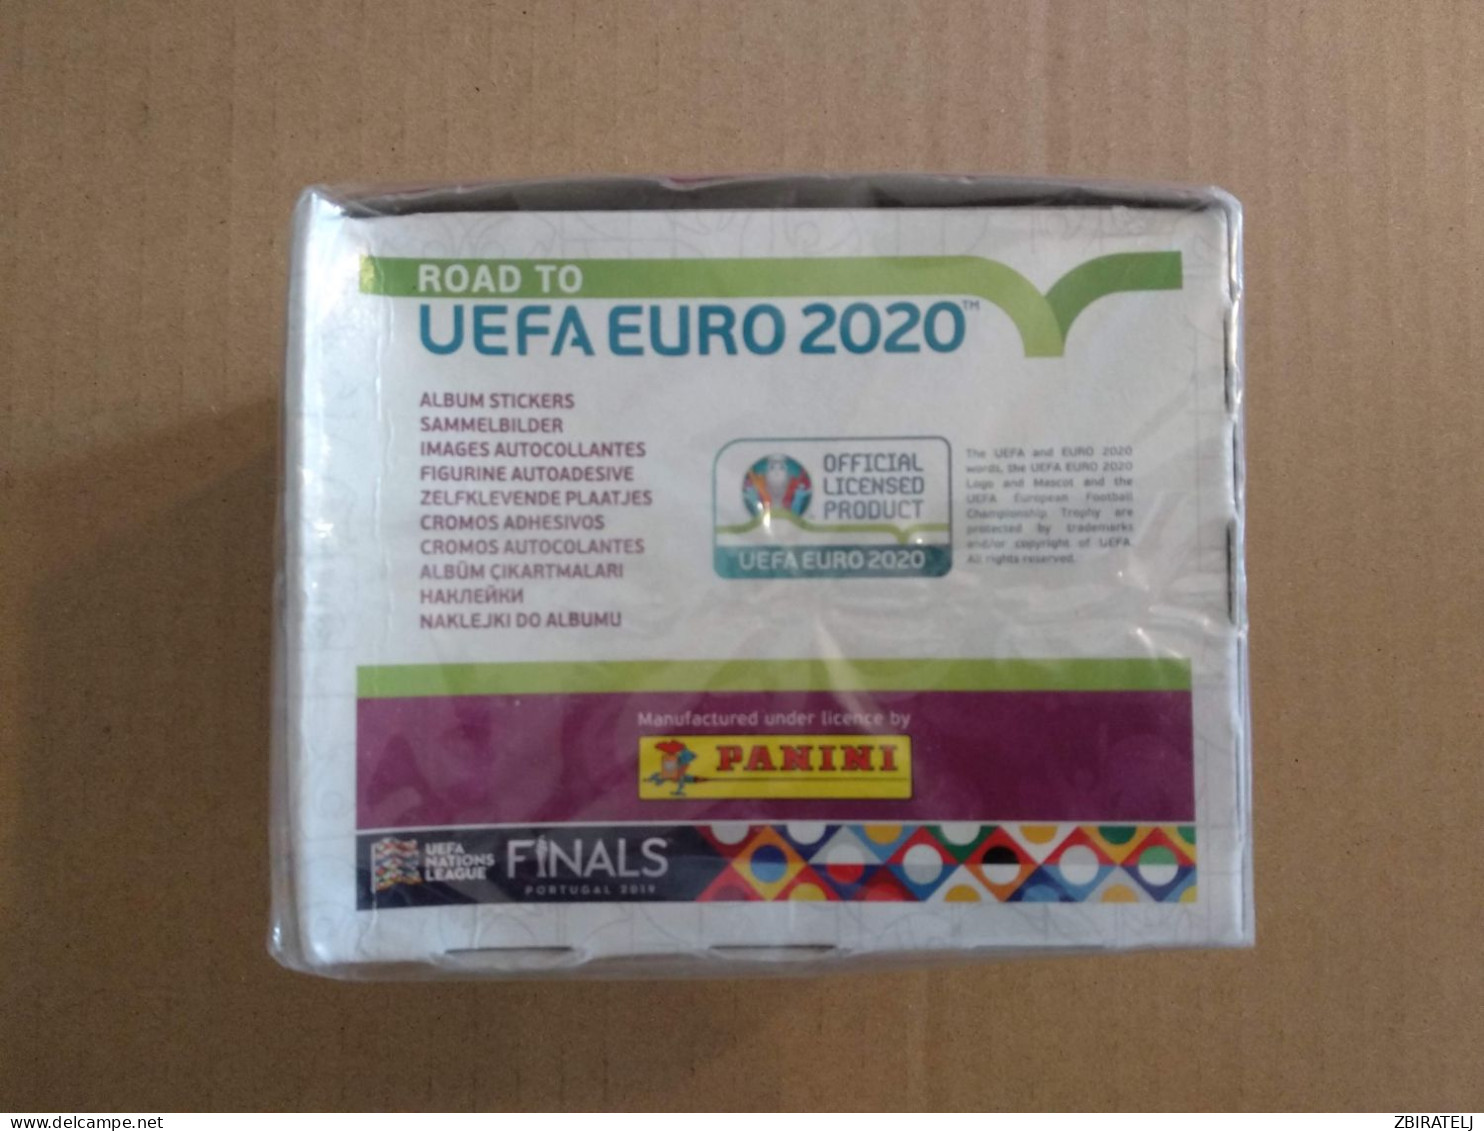 PANINI ROAD TO 2020 UEFA EURO DISPLAY - 50 PACKS - 250 STICKERS - Engelse Uitgave